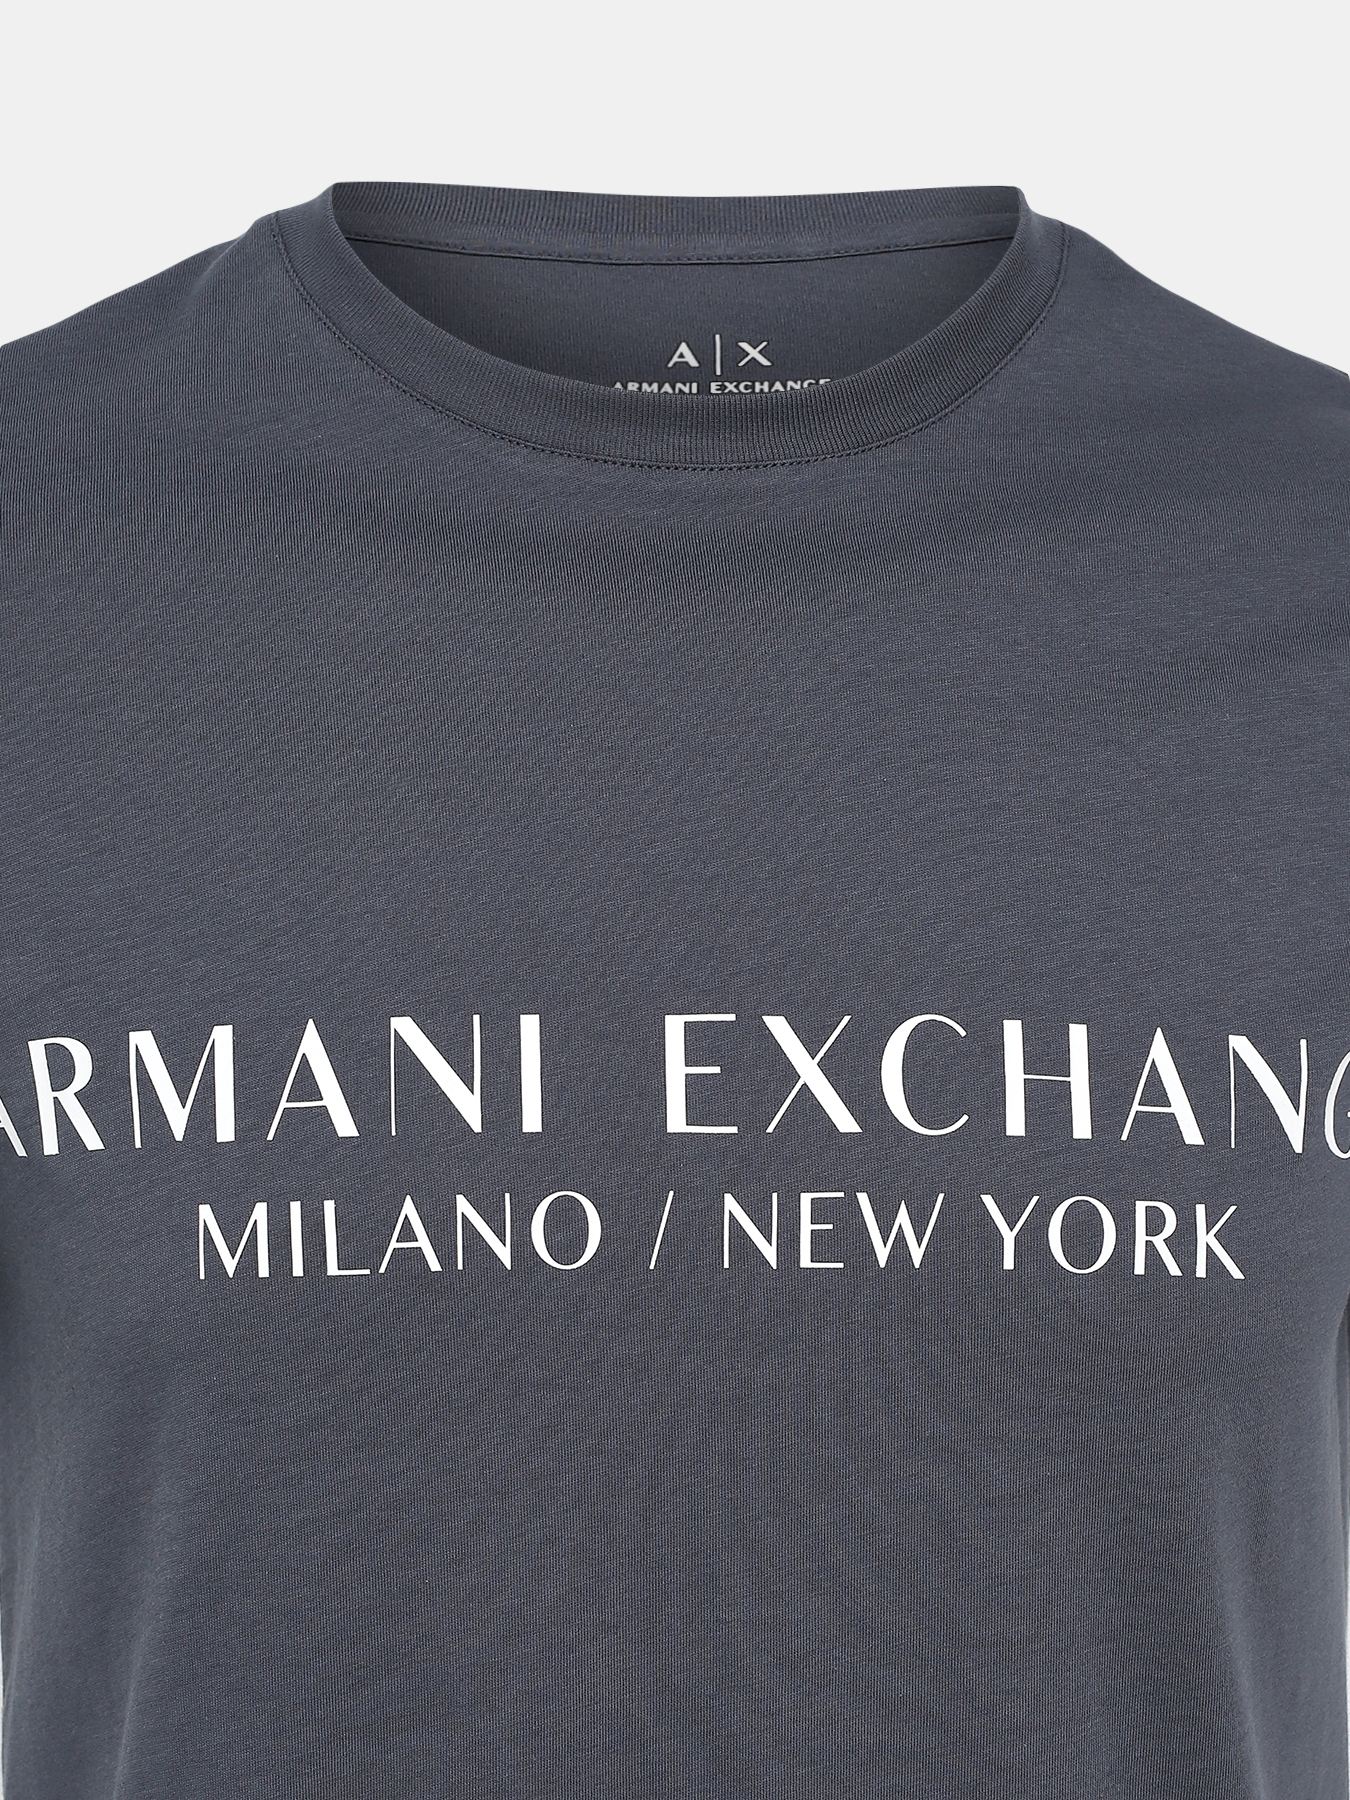 Футболка Armani Exchange 422425-045, цвет темно-серый, размер 52-54 - фото 3